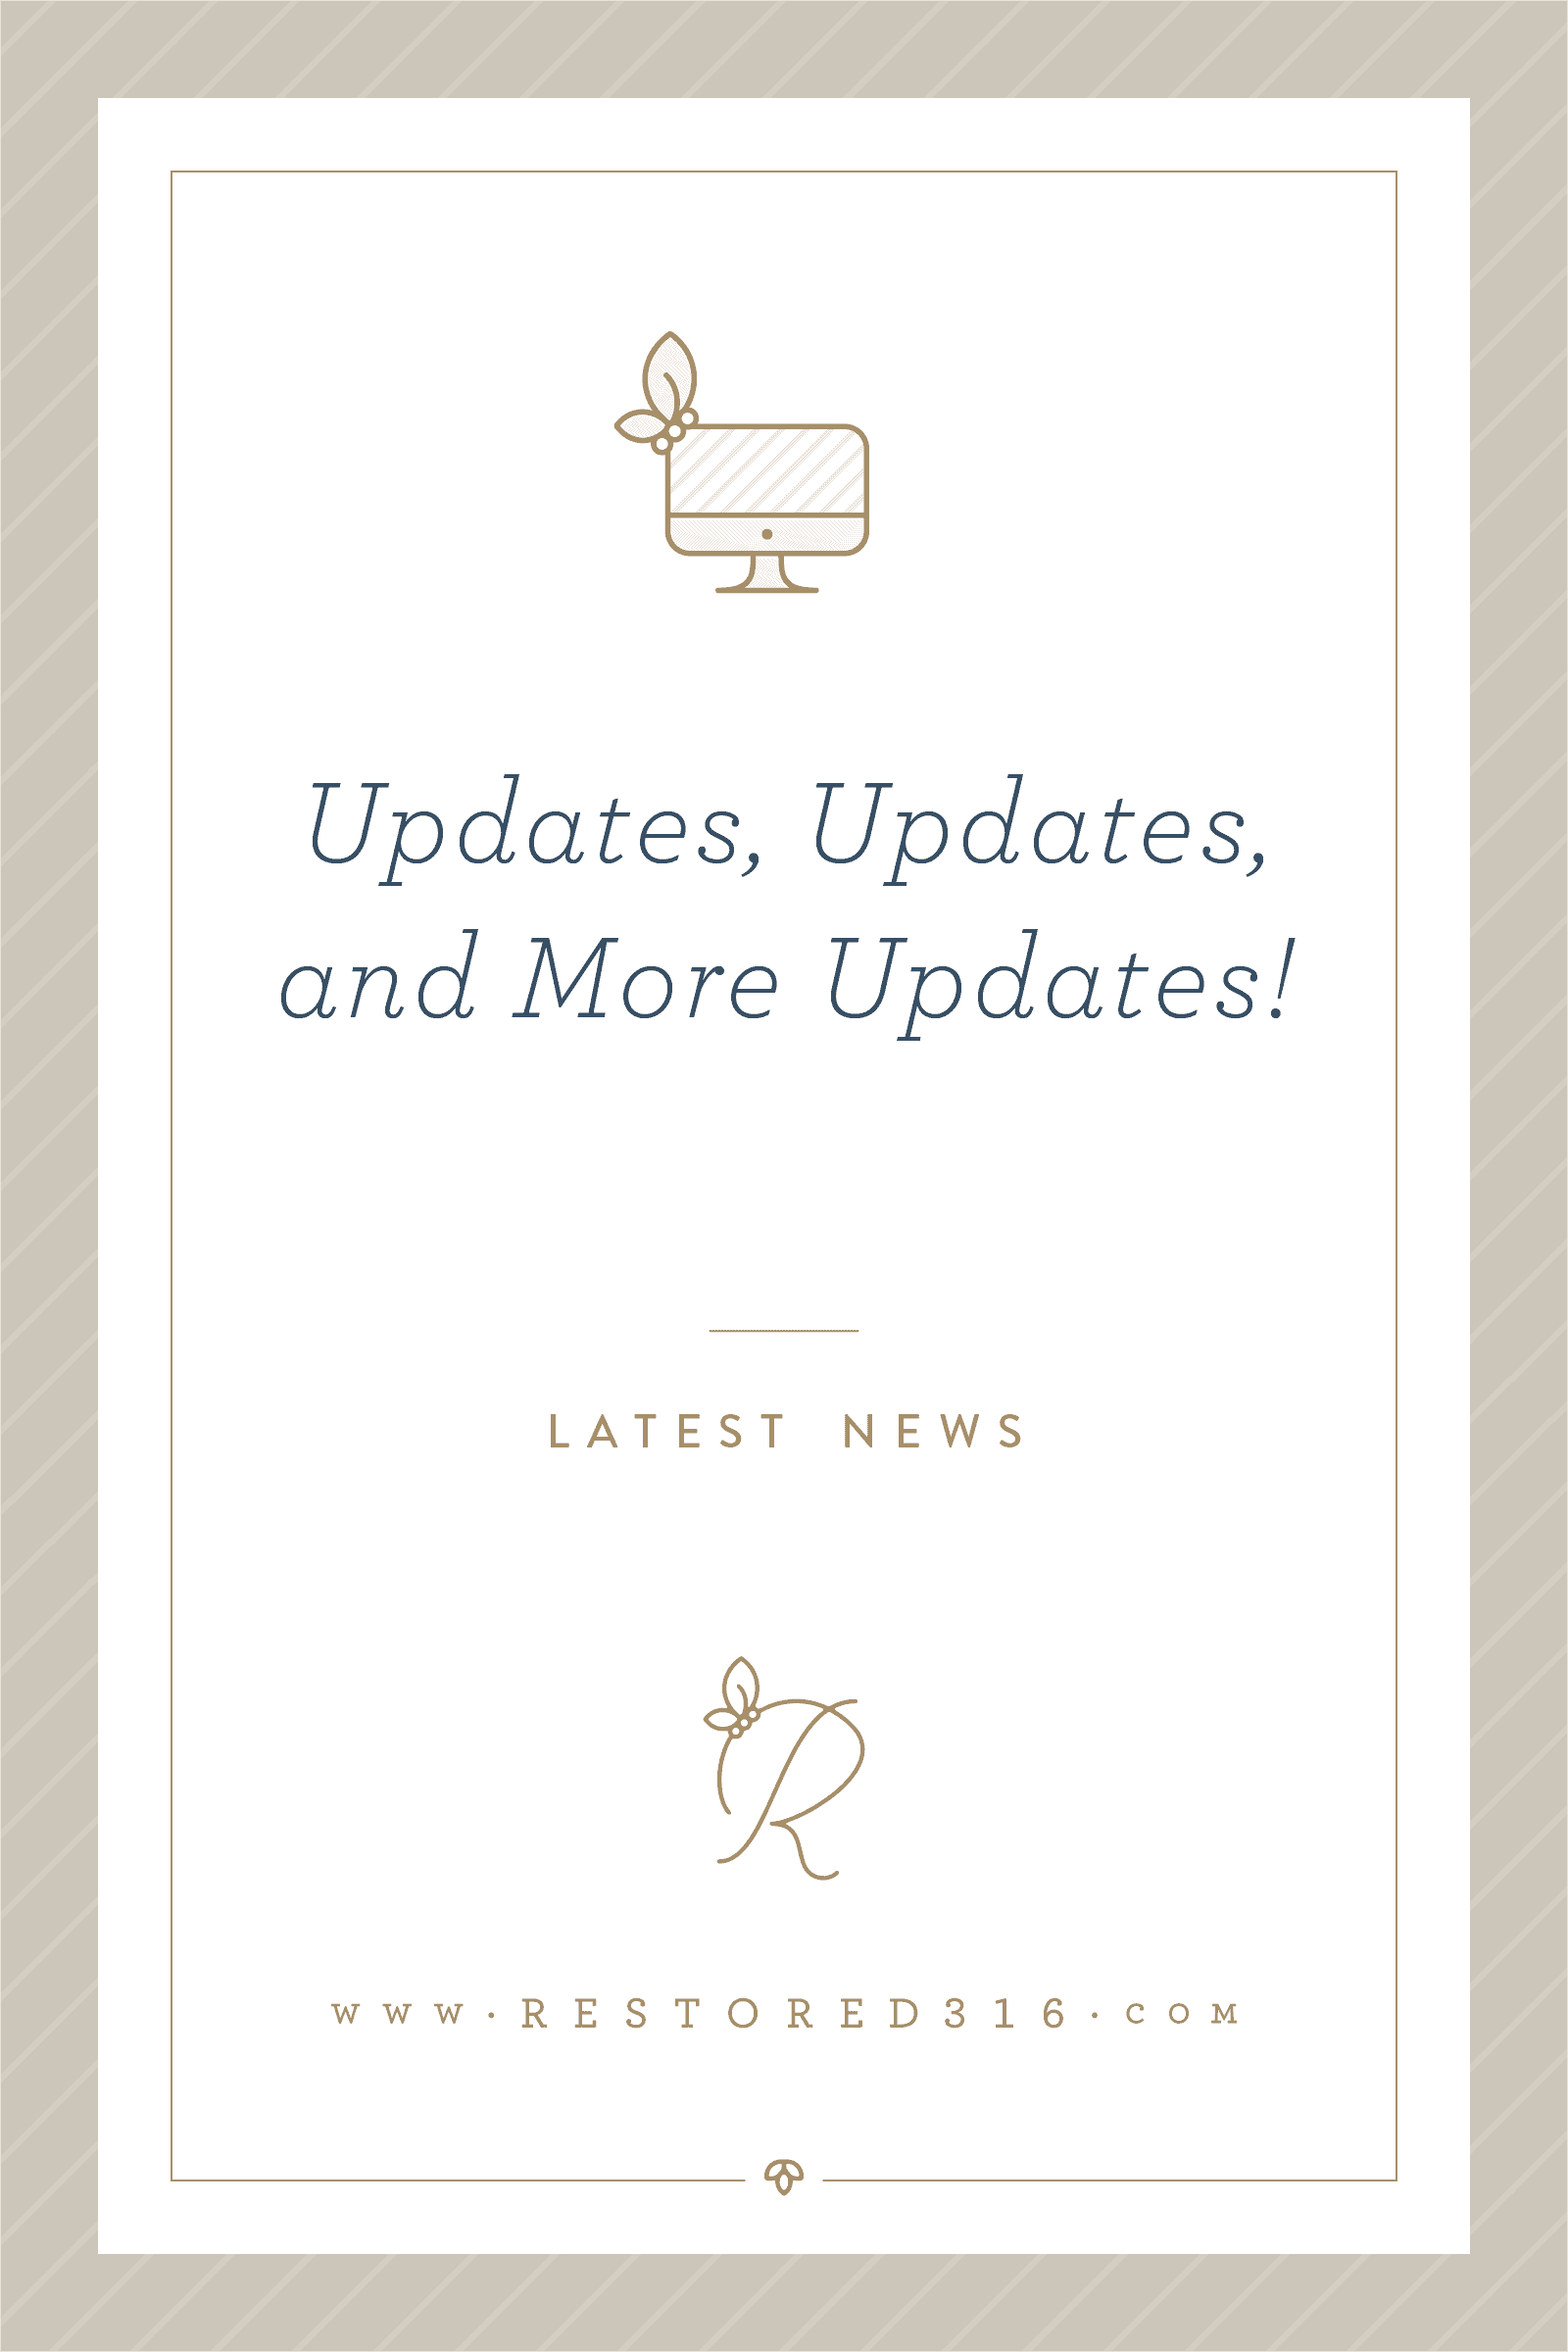 Updates, updates, and more updates!